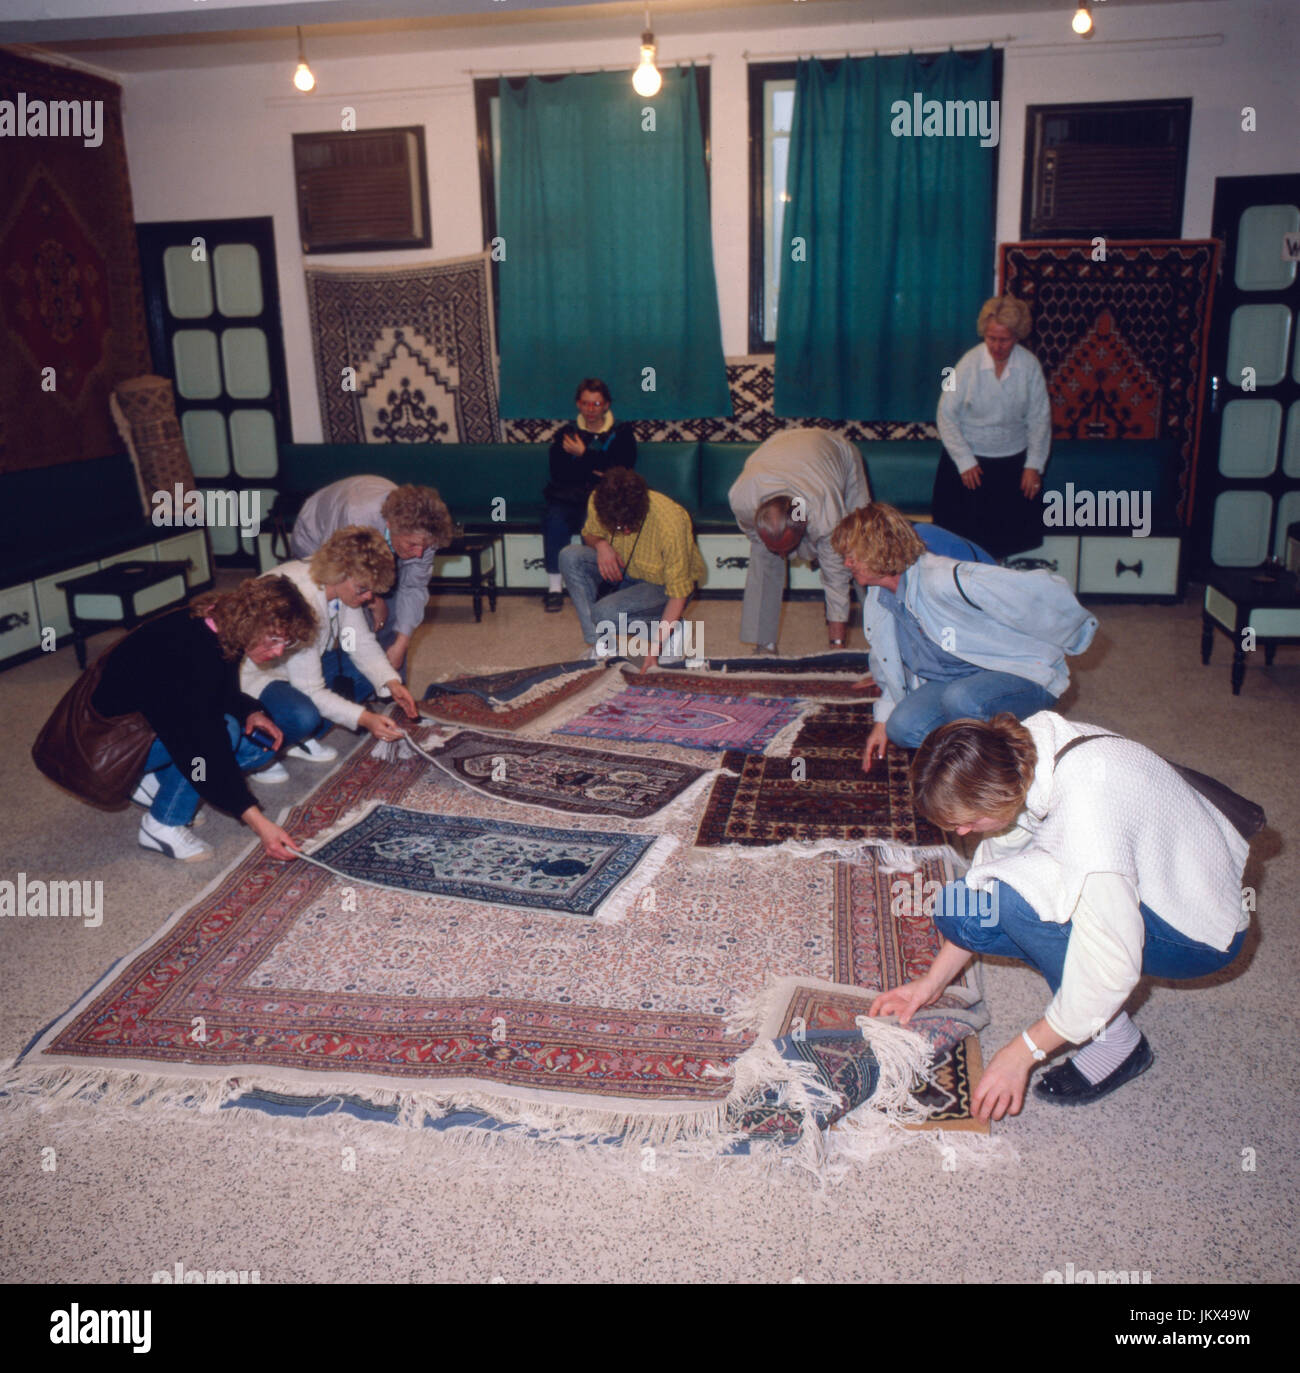 Touristen beim Teppichkauf in Kairouan, Tunesien 1980er Jahre. I turisti sono per acquistare tappeti come souvenir a Kairouan, Tunisia degli anni ottanta. Foto Stock